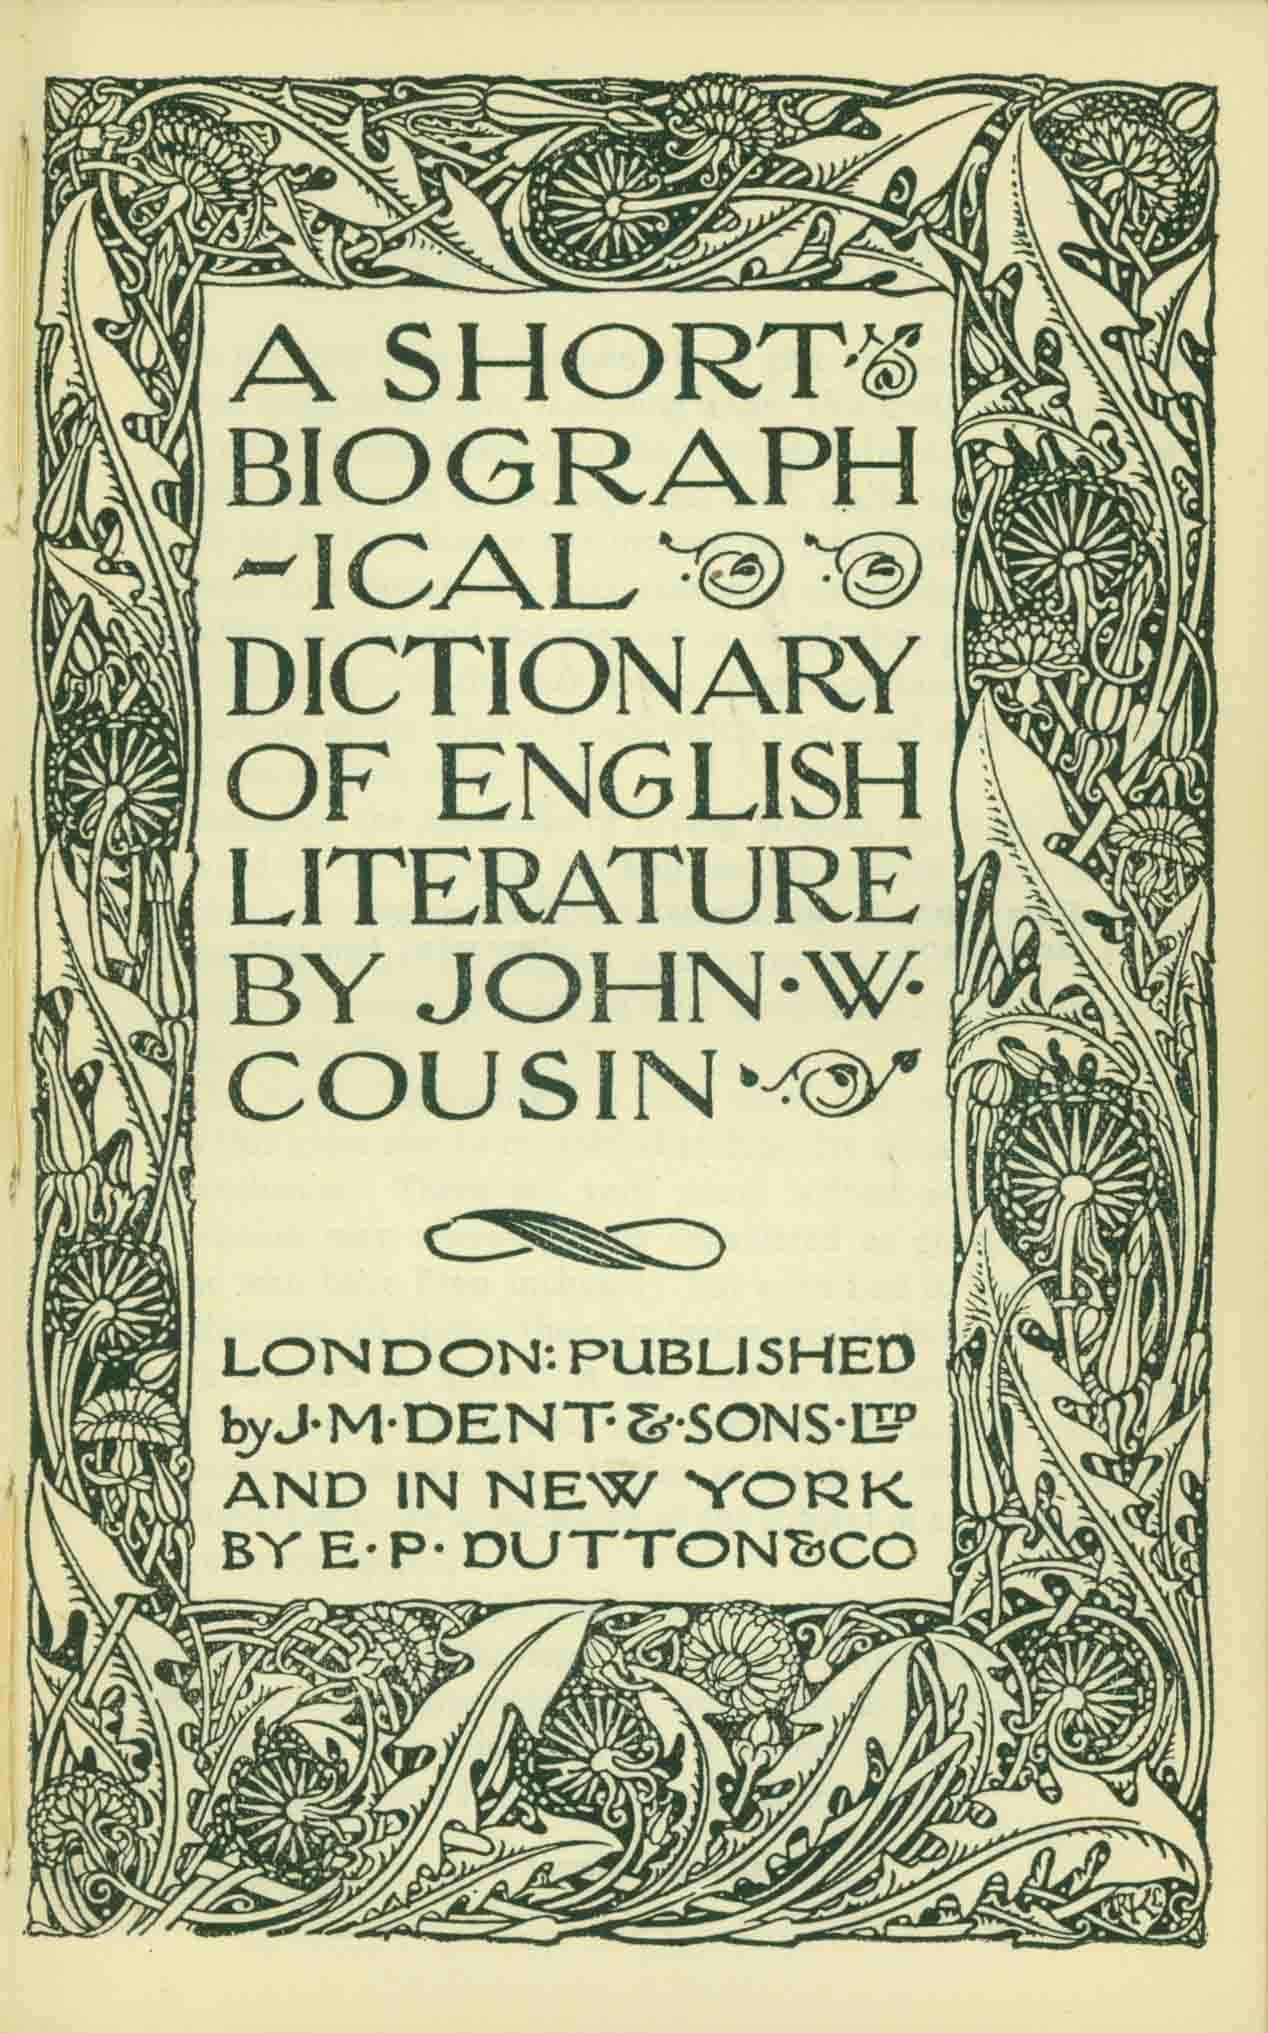 biography of english literature